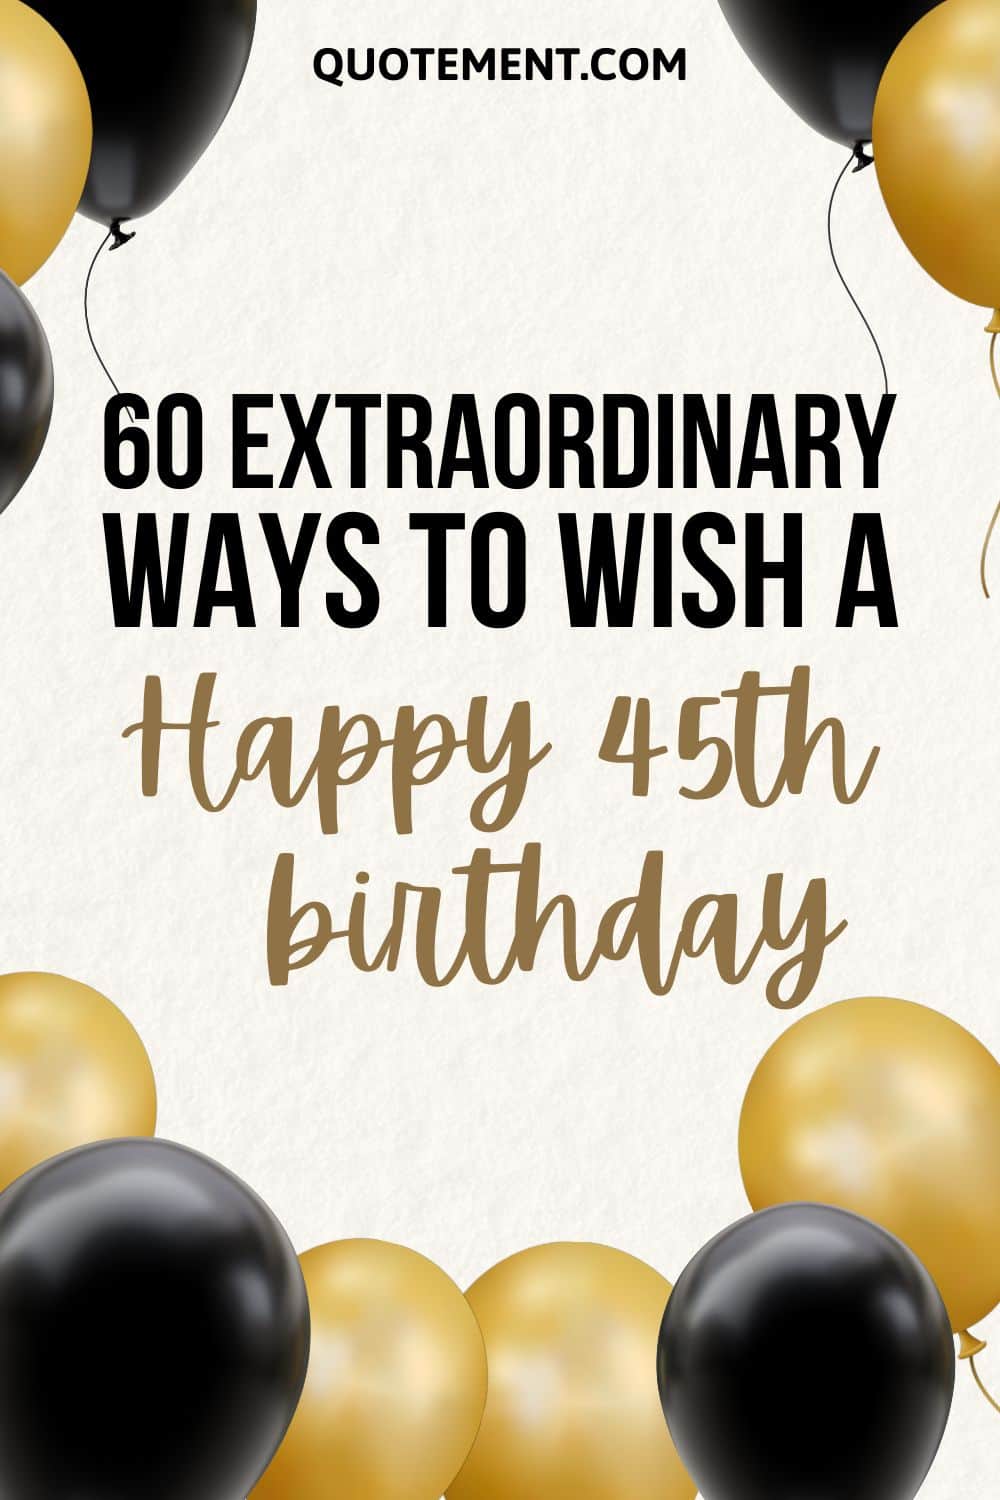 60 Extraordinary Ways To Wish A Happy 45th Birthday
